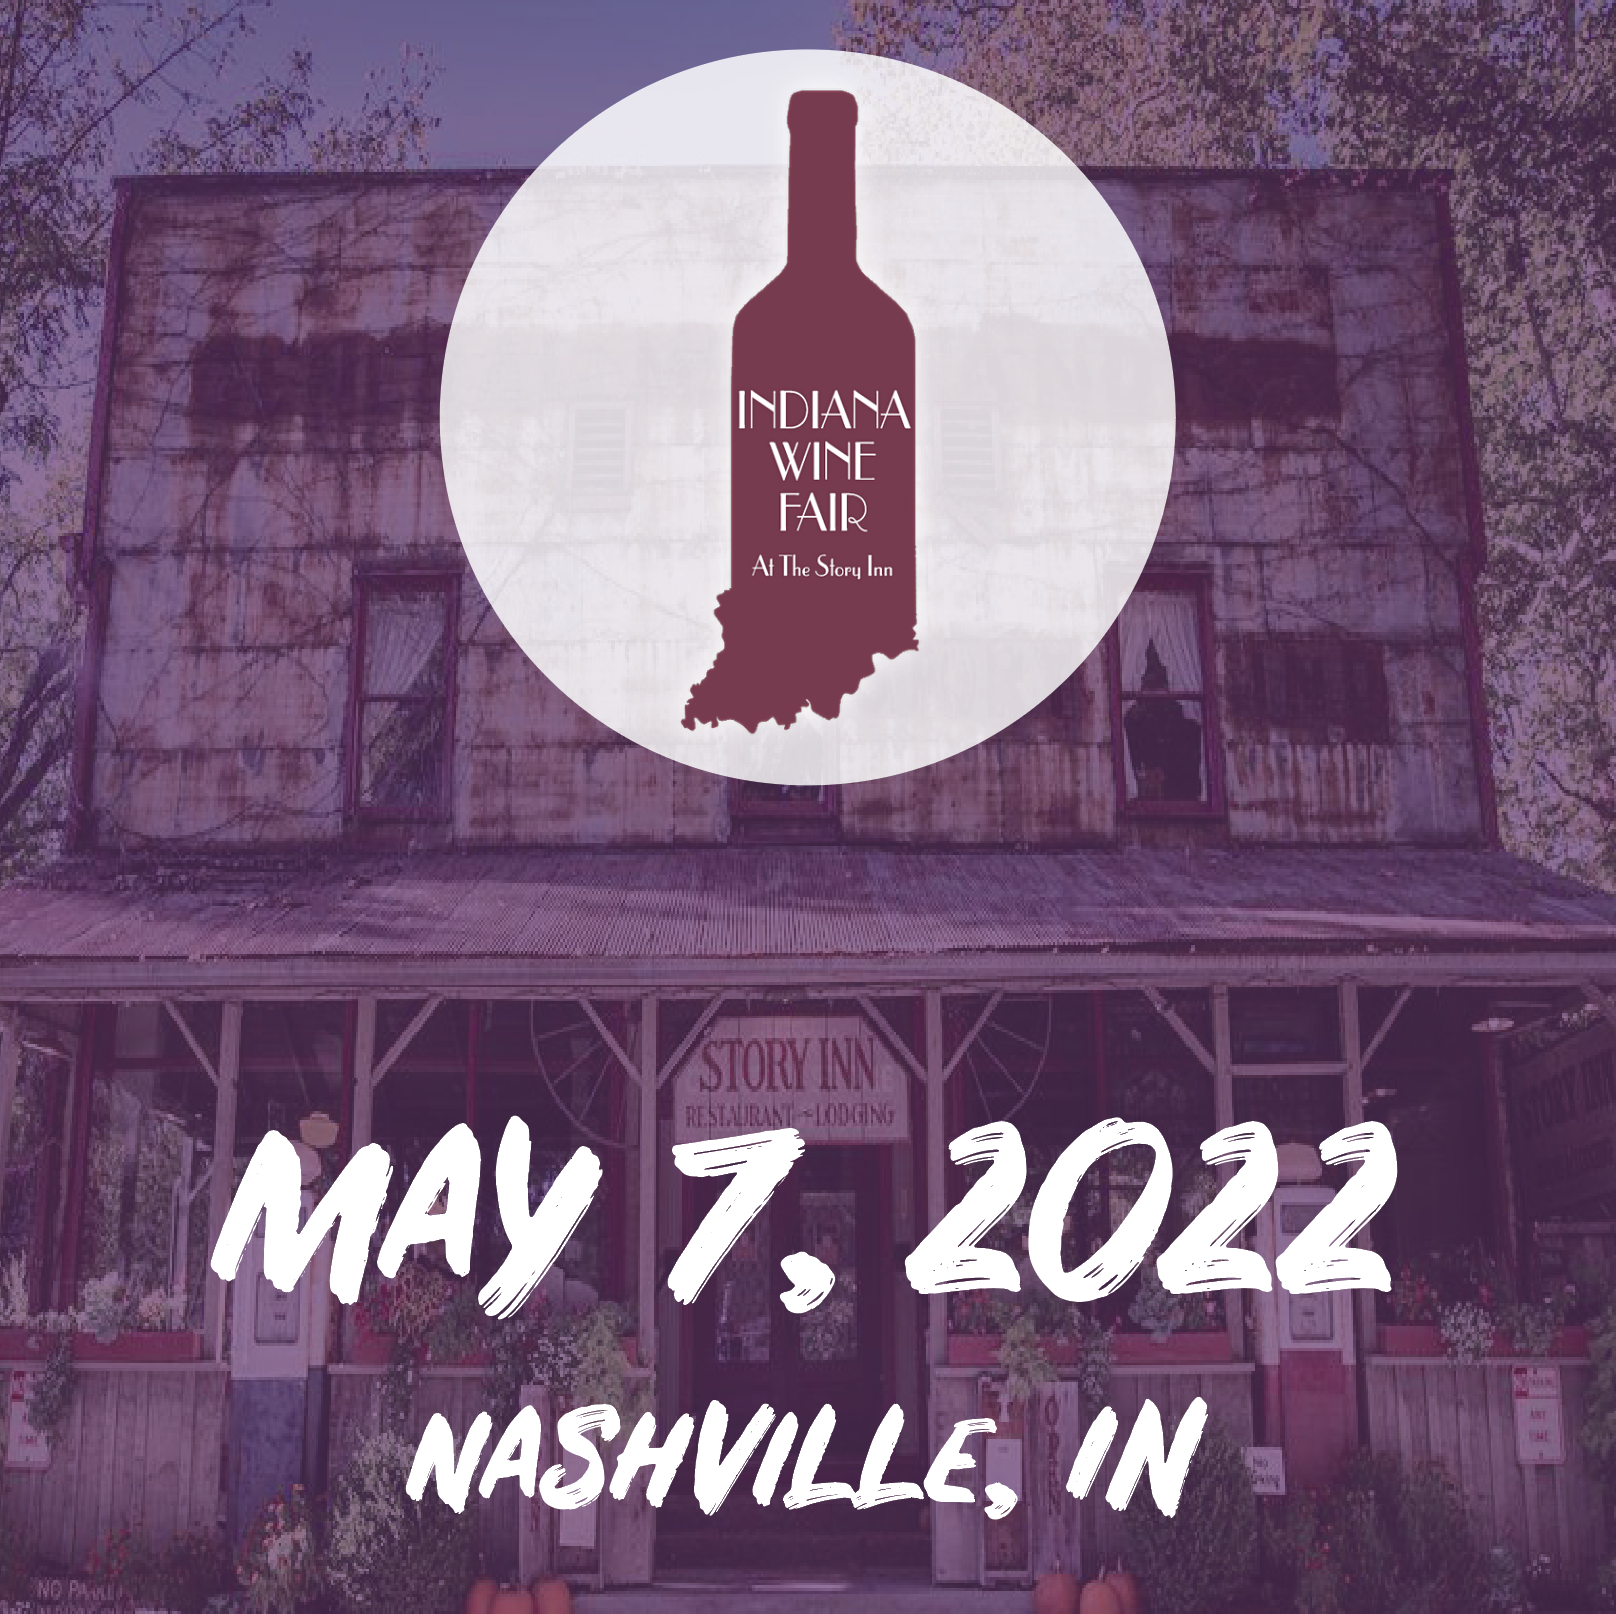 Indiana Wine Fair 2022 Date